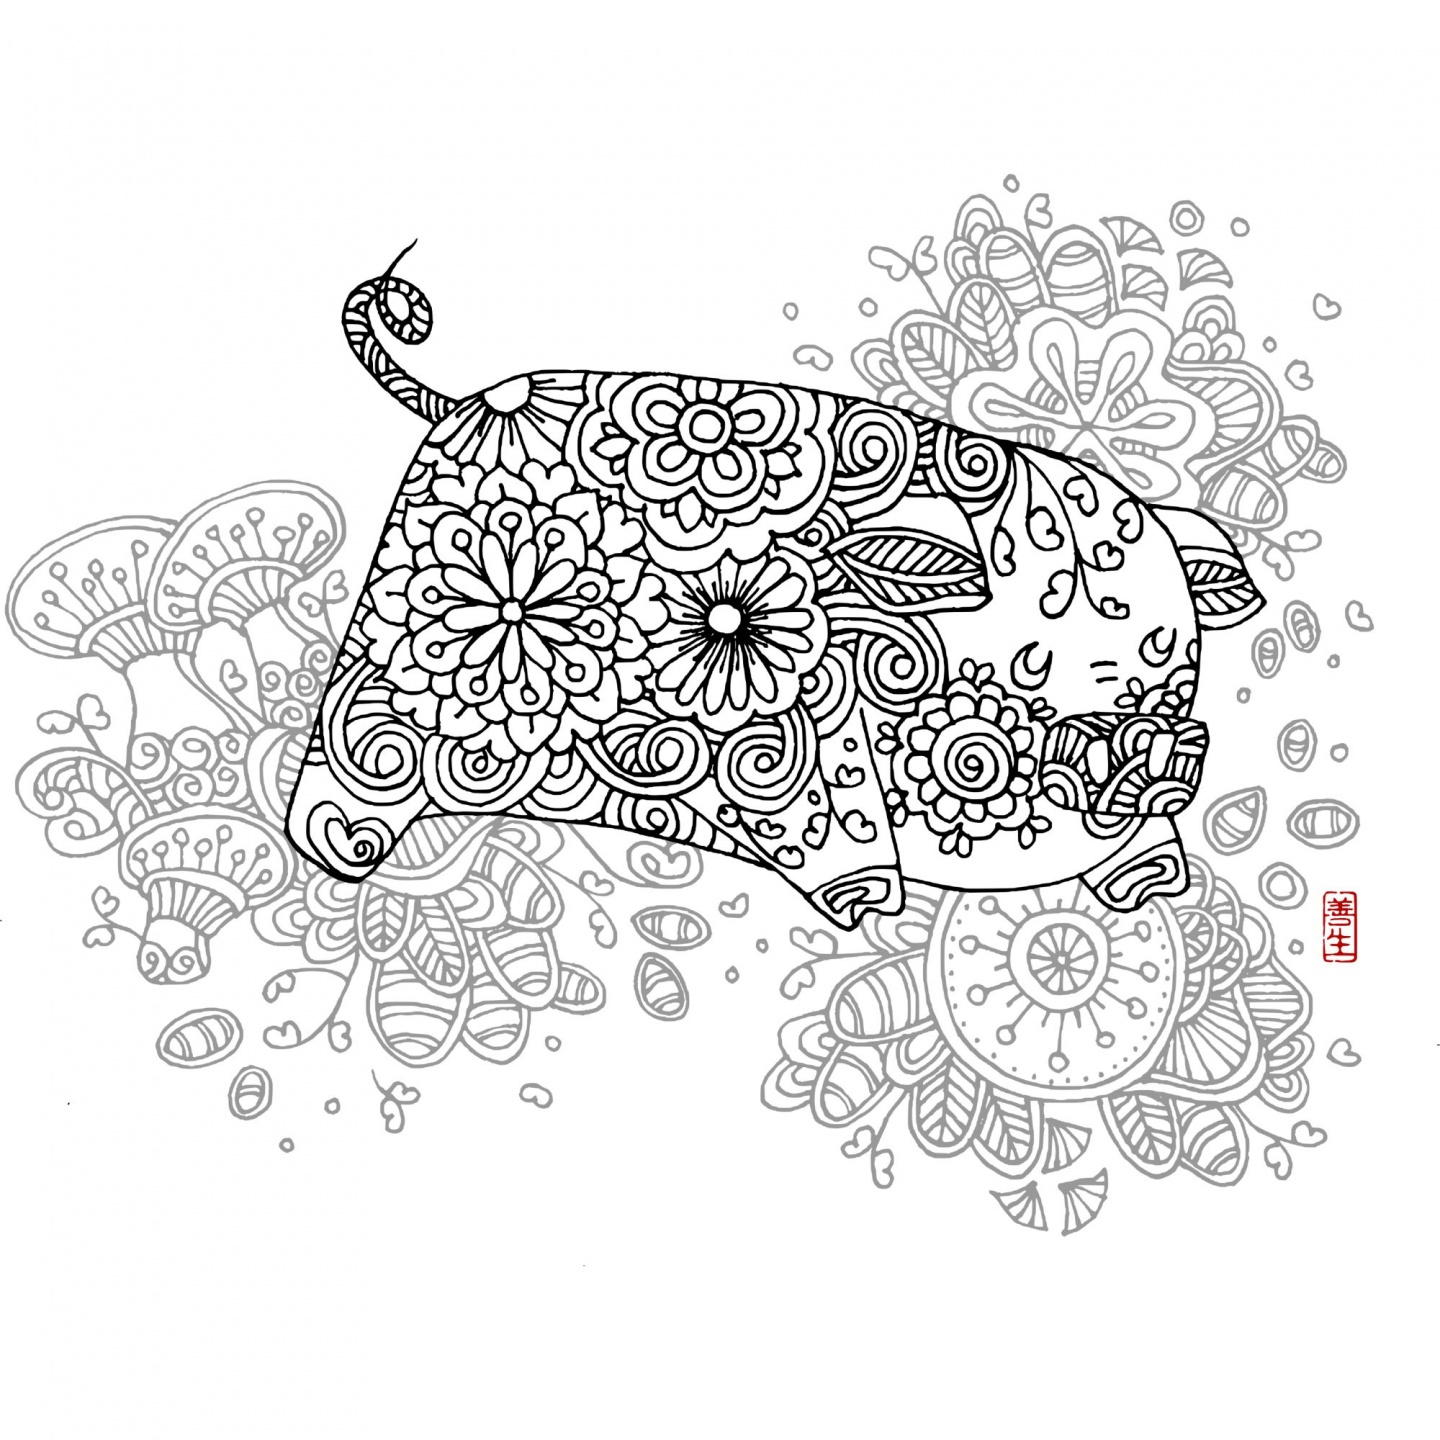 Chinese zodiac : PIG